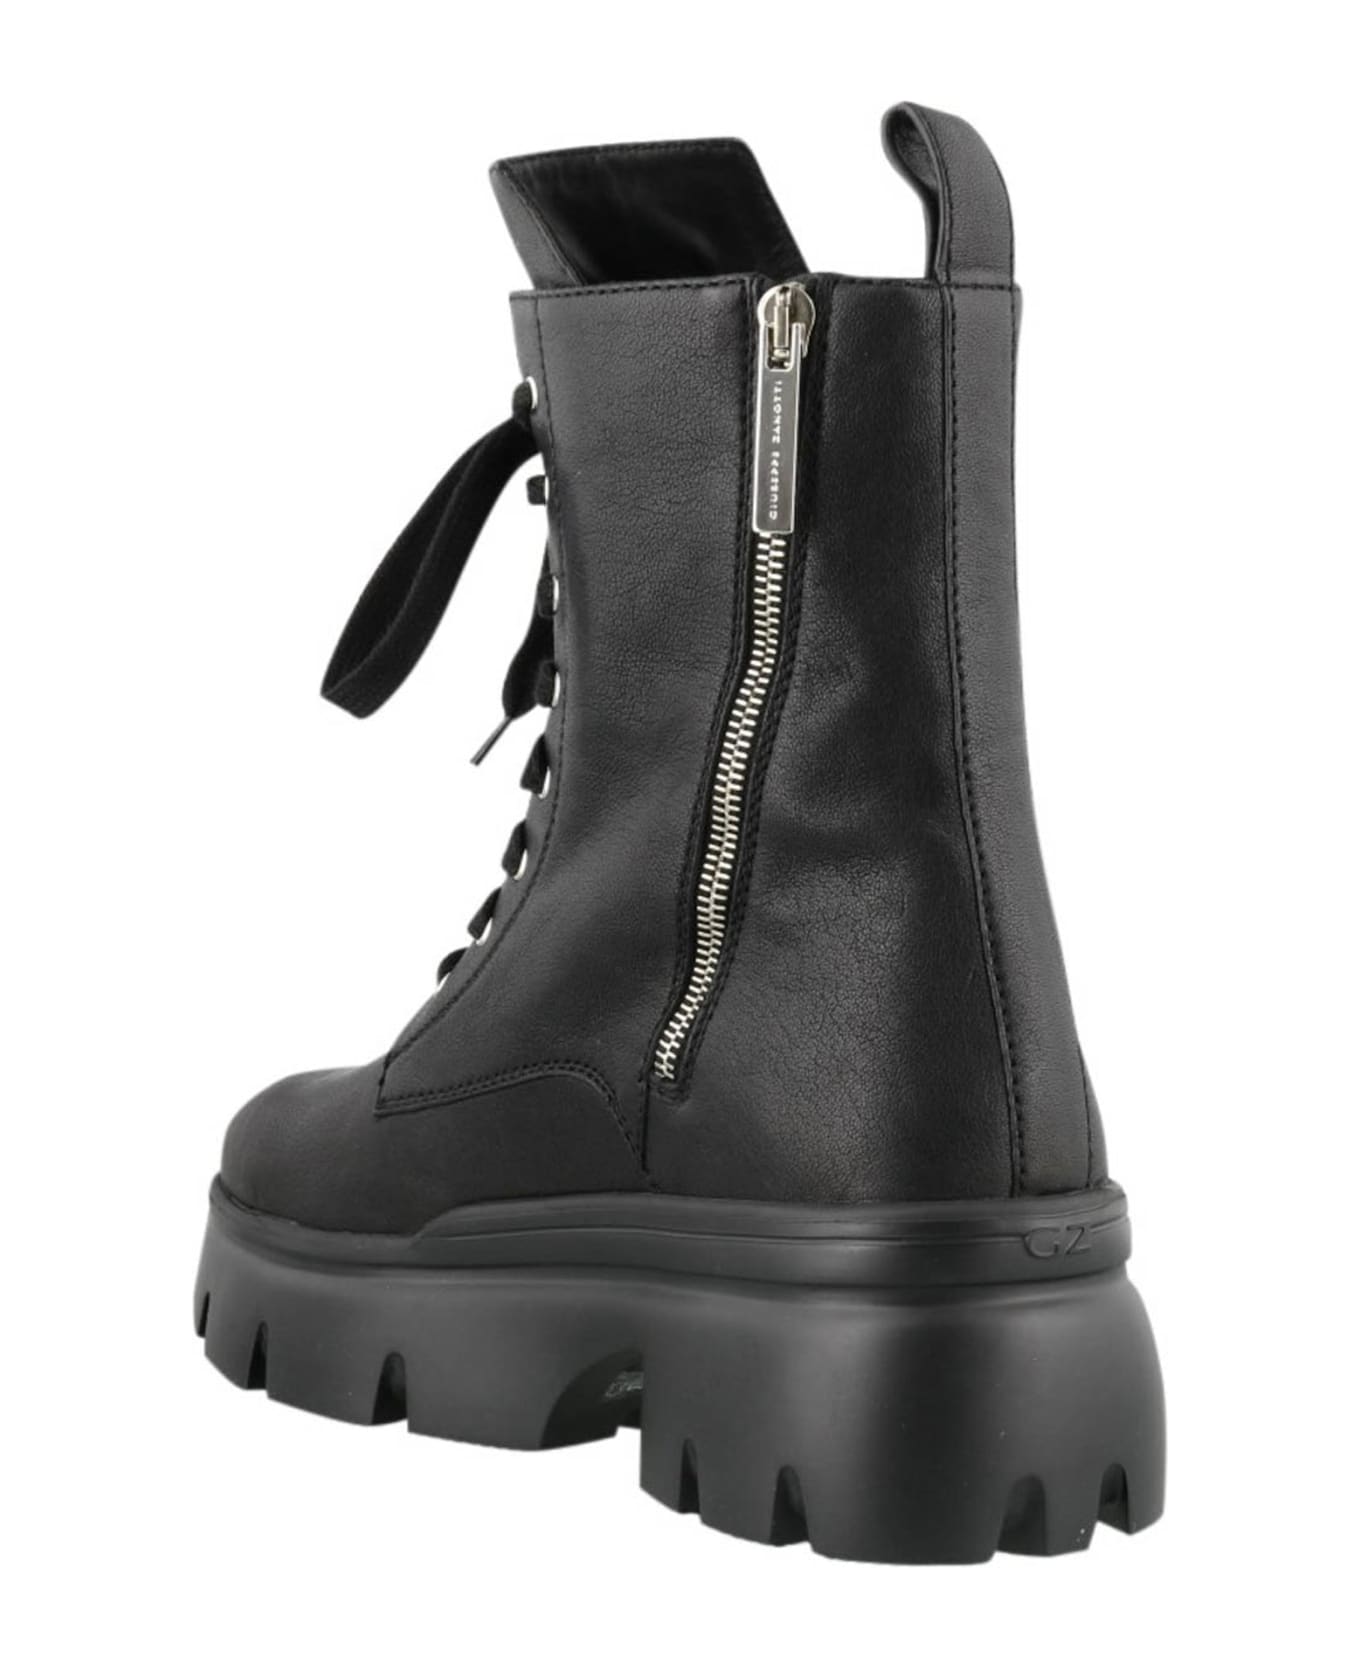 Giuseppe Zanotti Design Apocalypse Leather Boots - Black